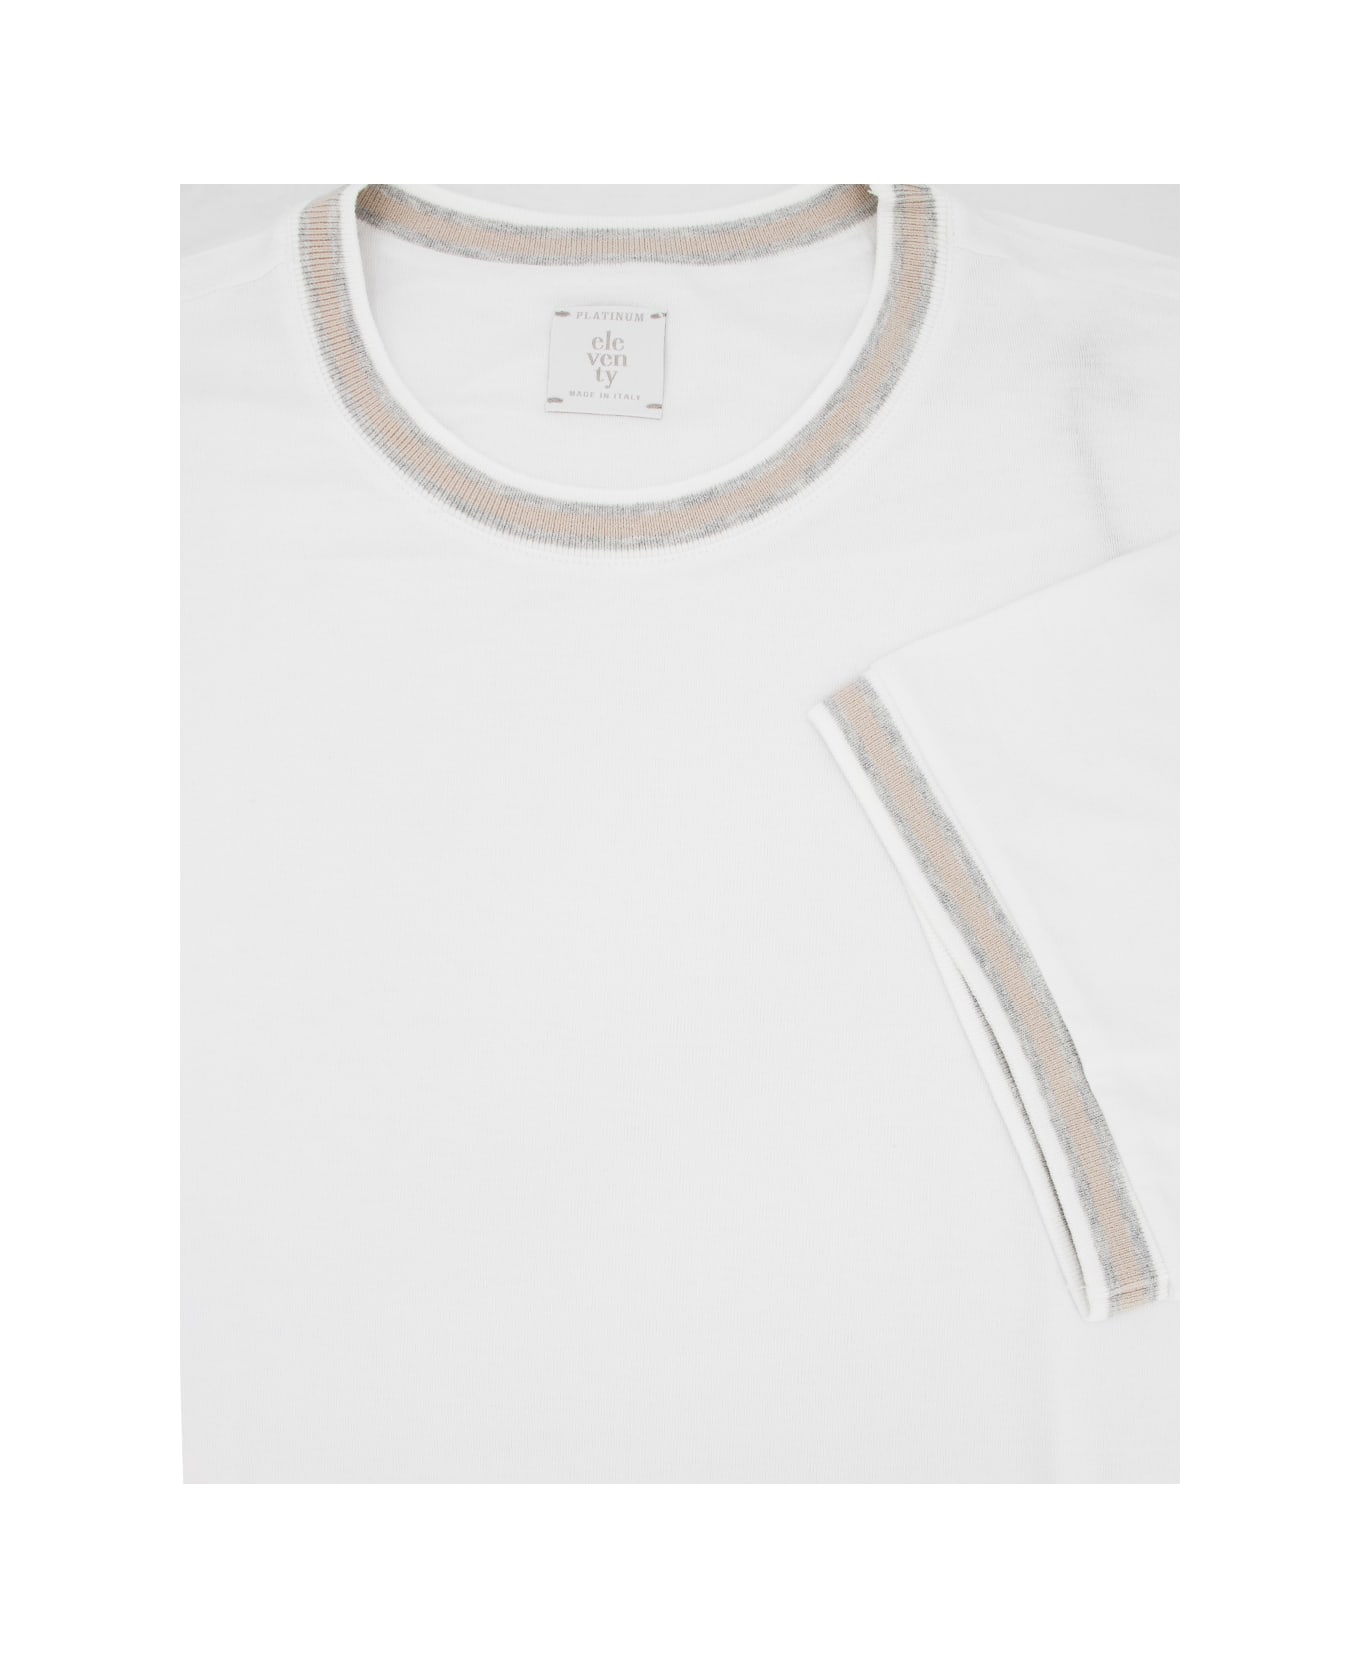 Eleventy T-shirt - WHITE